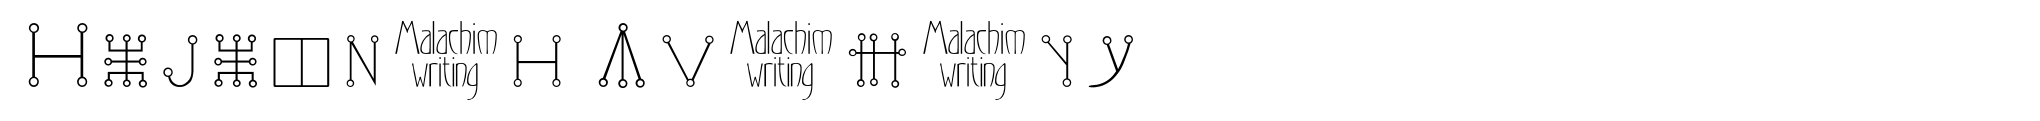 Malachim Writing image